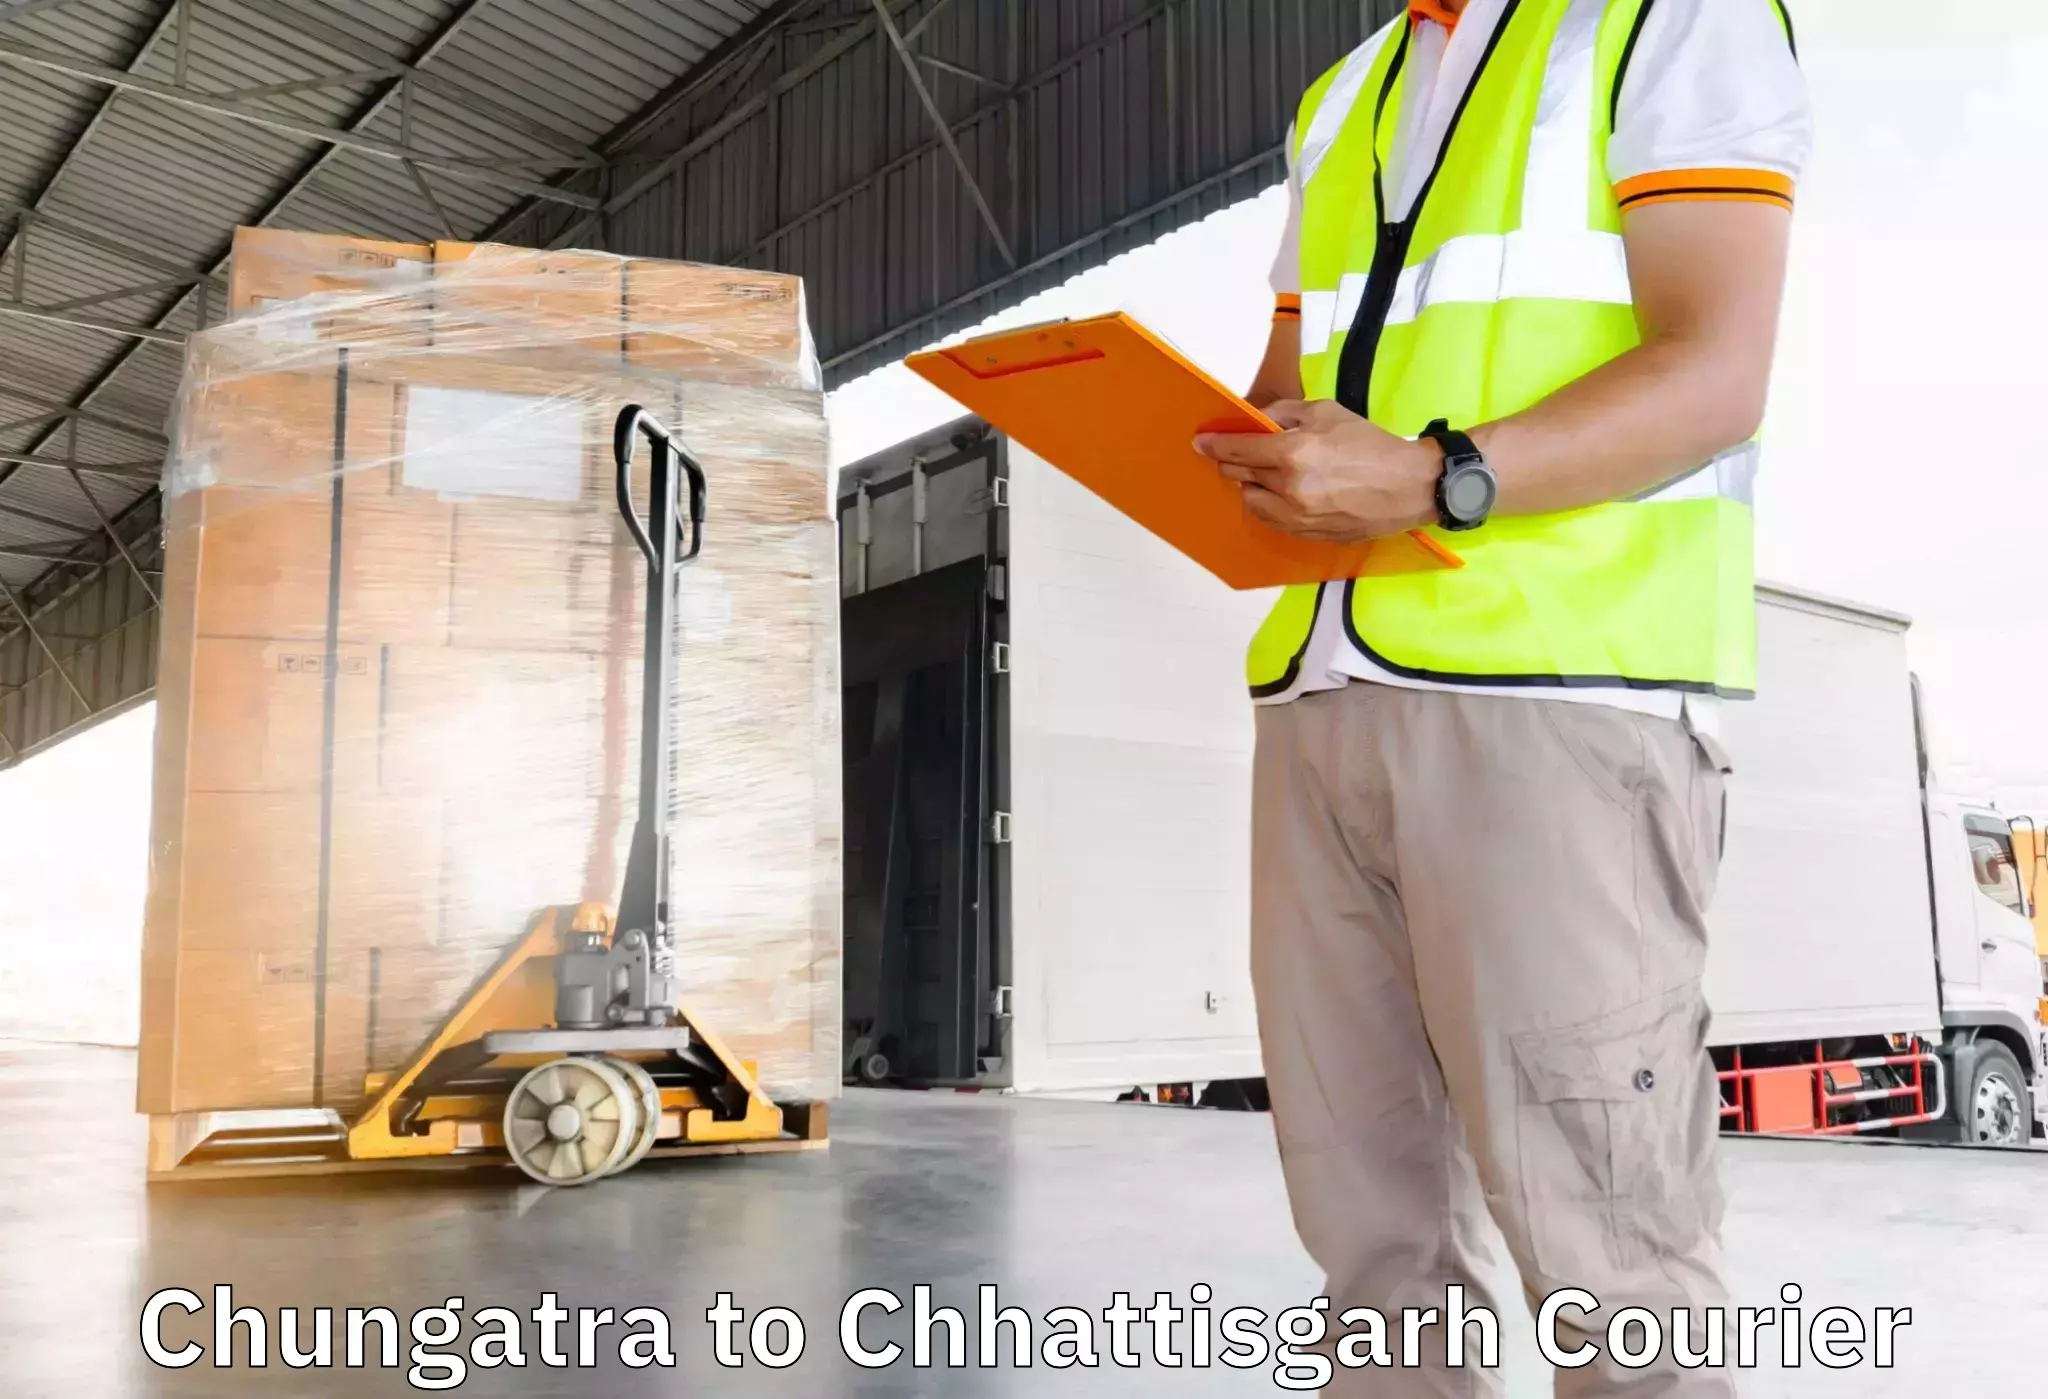 Home goods moving company Chungatra to Basna